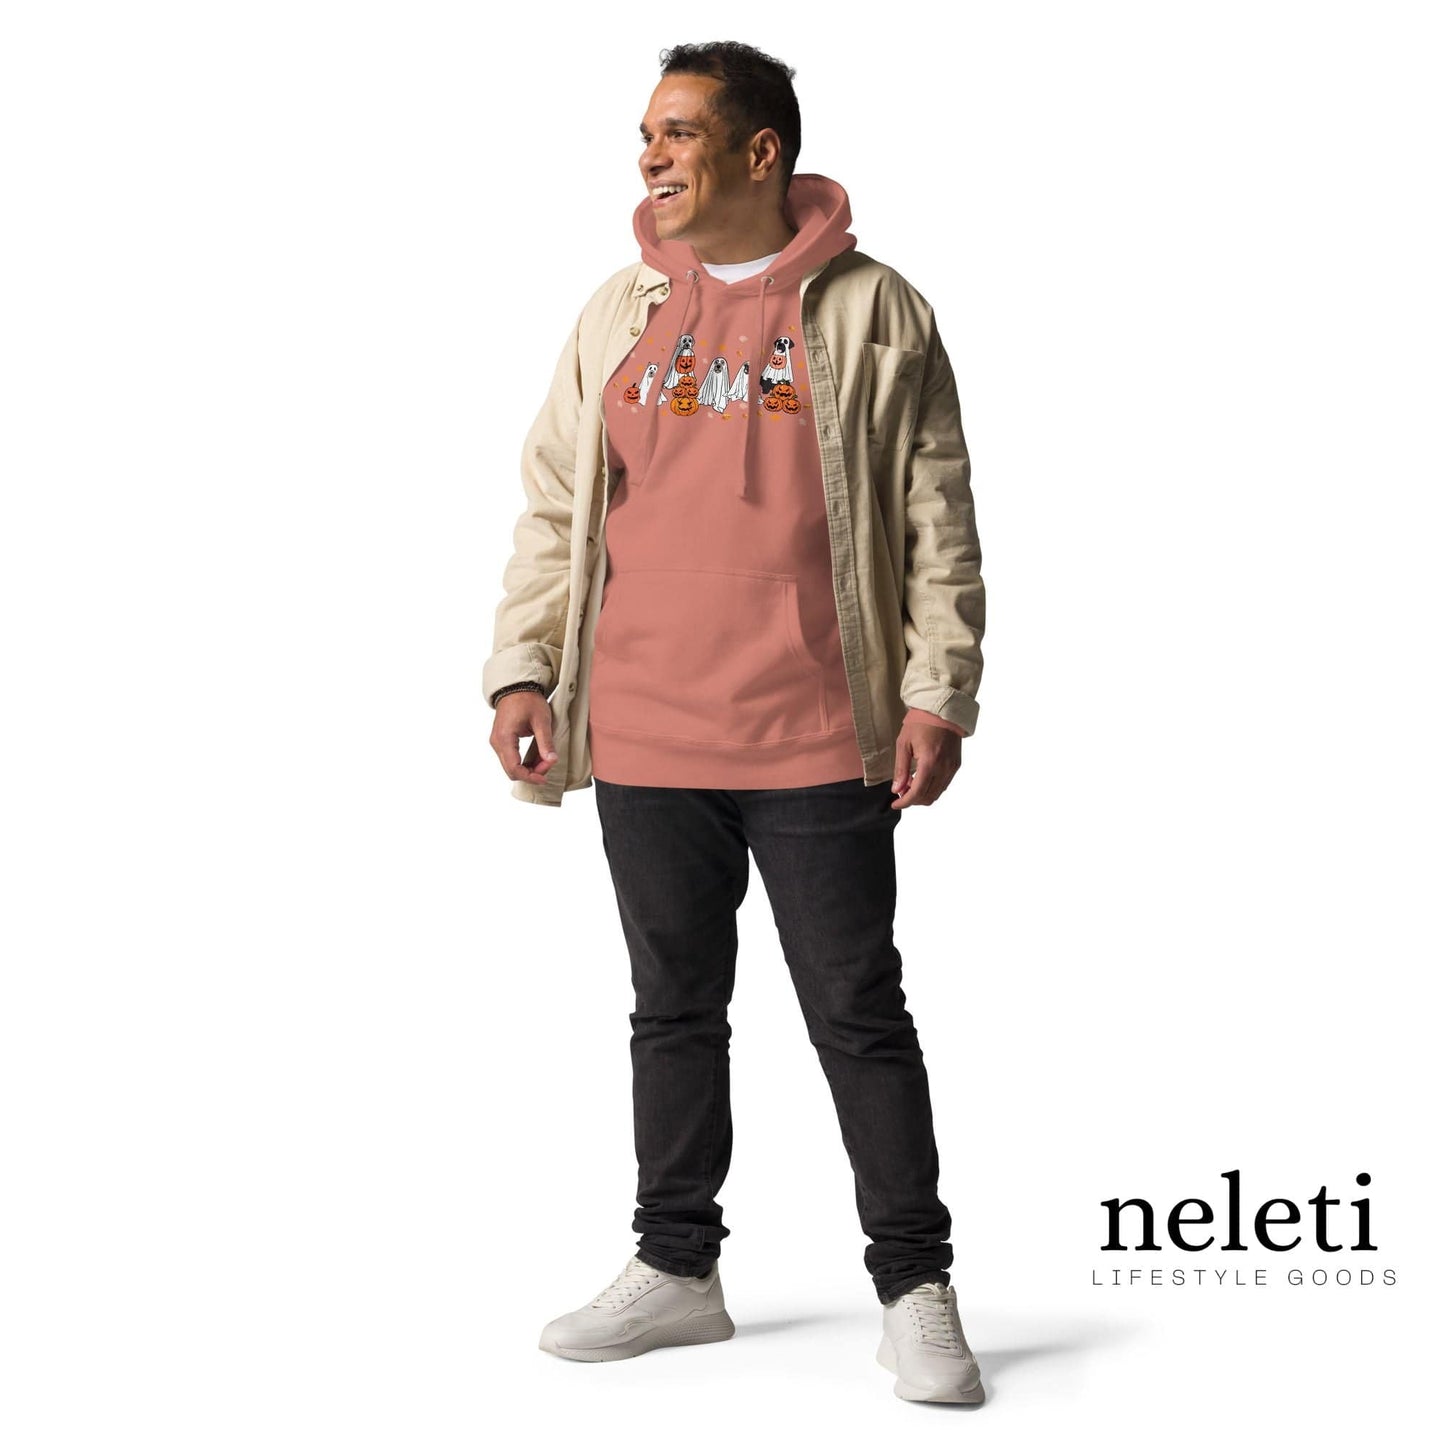 neleti.com-haloween-dusty-rose-hoodie-for-dog-lovers